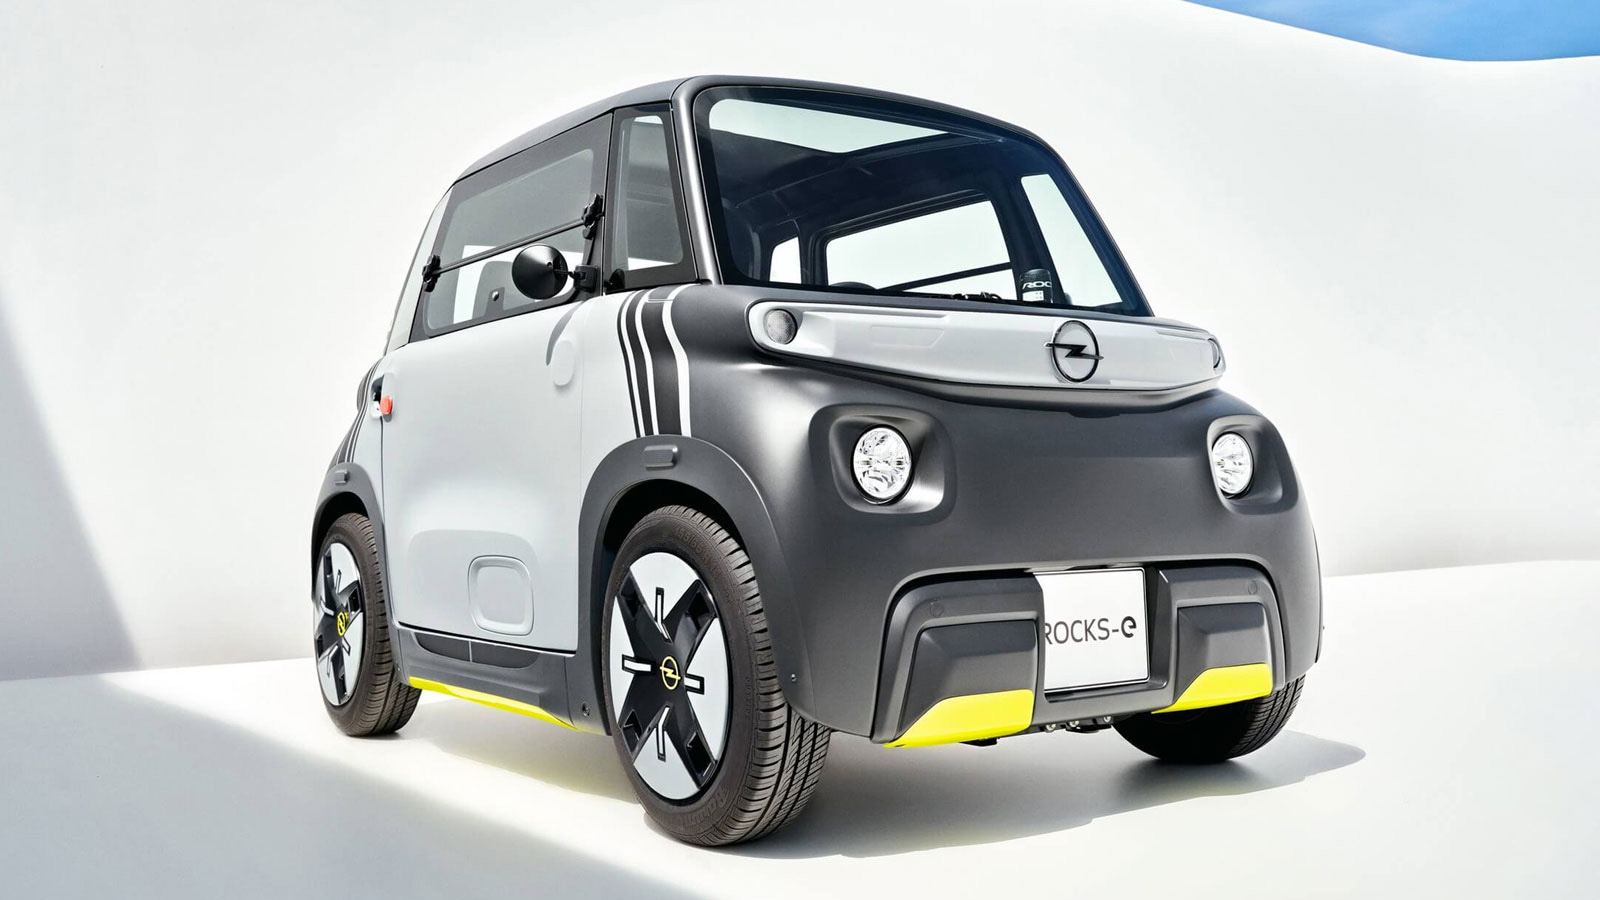 To νέο ηλεκτρικό Opel Rocks-e, είναι αδερφάκι του Citroen Ami